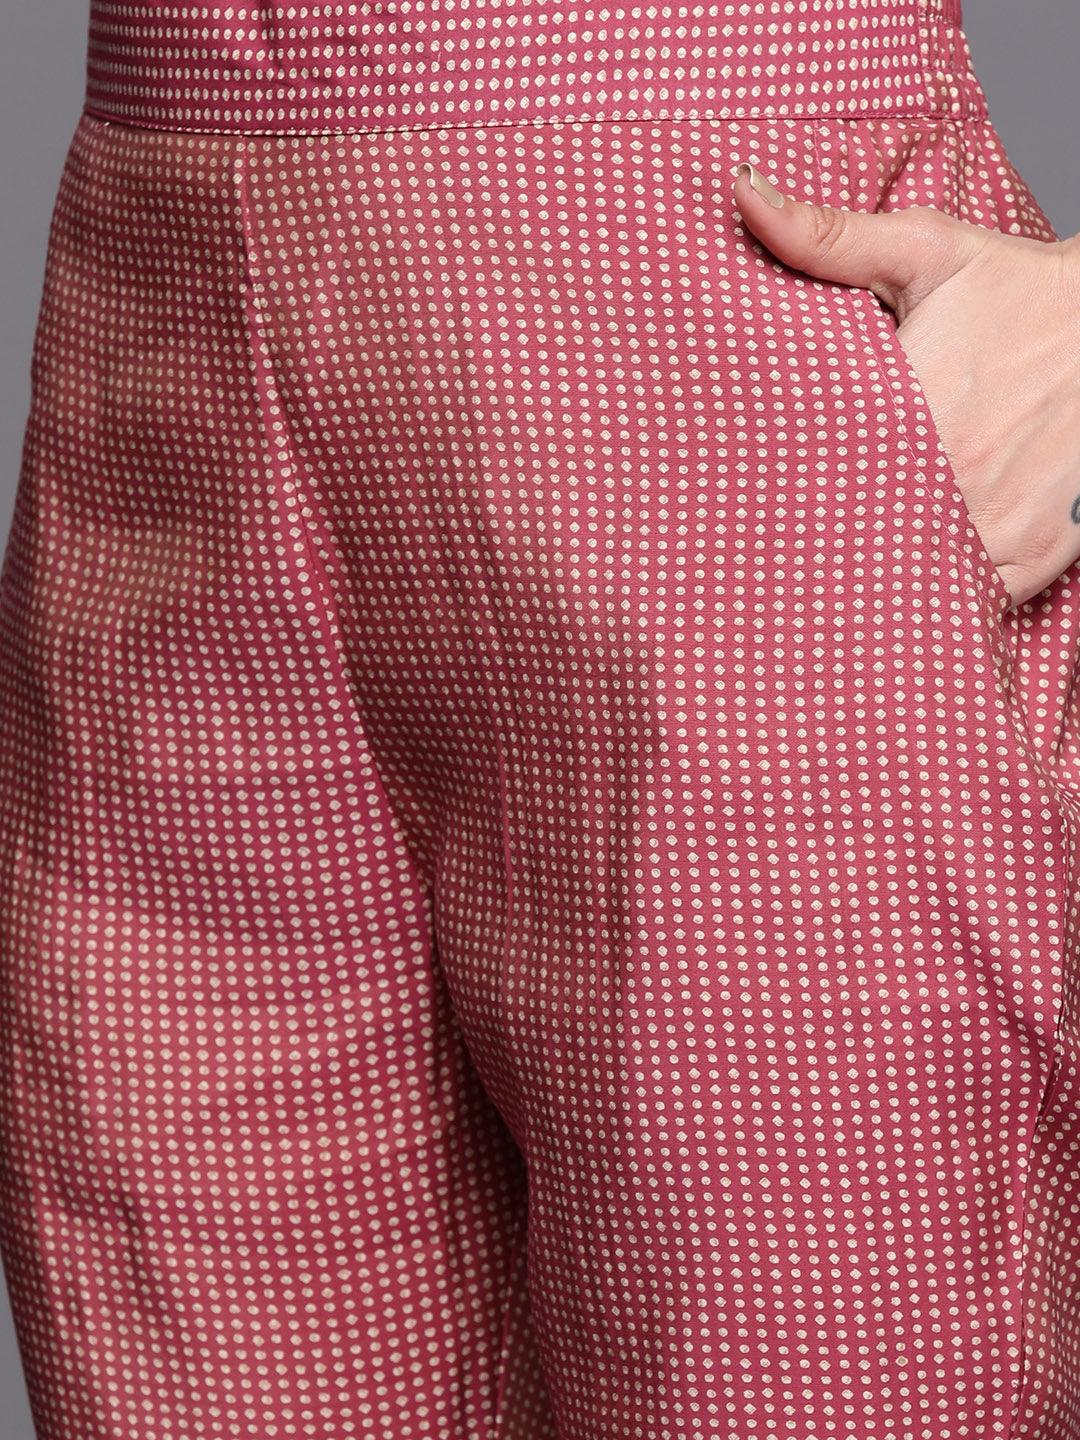 Multicoloured Yoke Design Silk Blend Straight Suit Set With Trousers - Libas